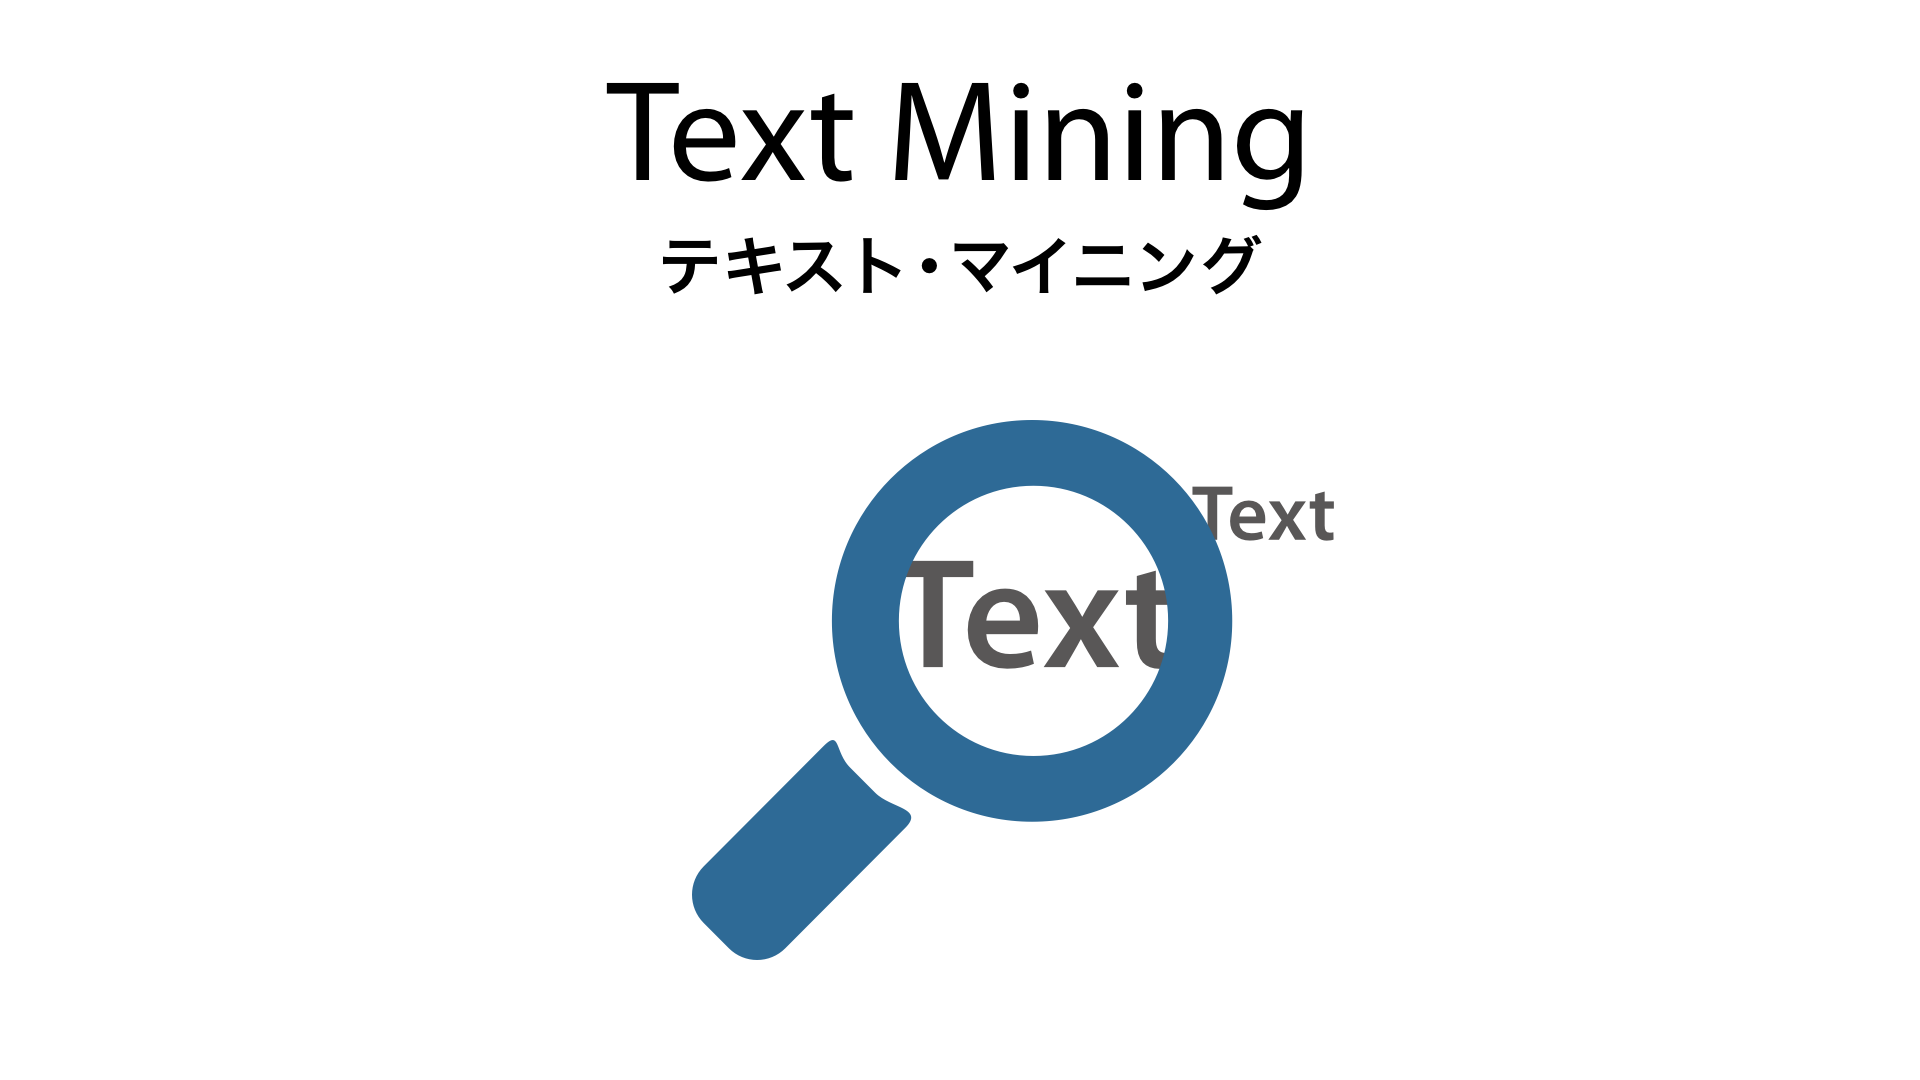 Text Mining картинки. Задачи text Mining. Text майнинг. Text Mining анализ текста. Анализ текста сайта